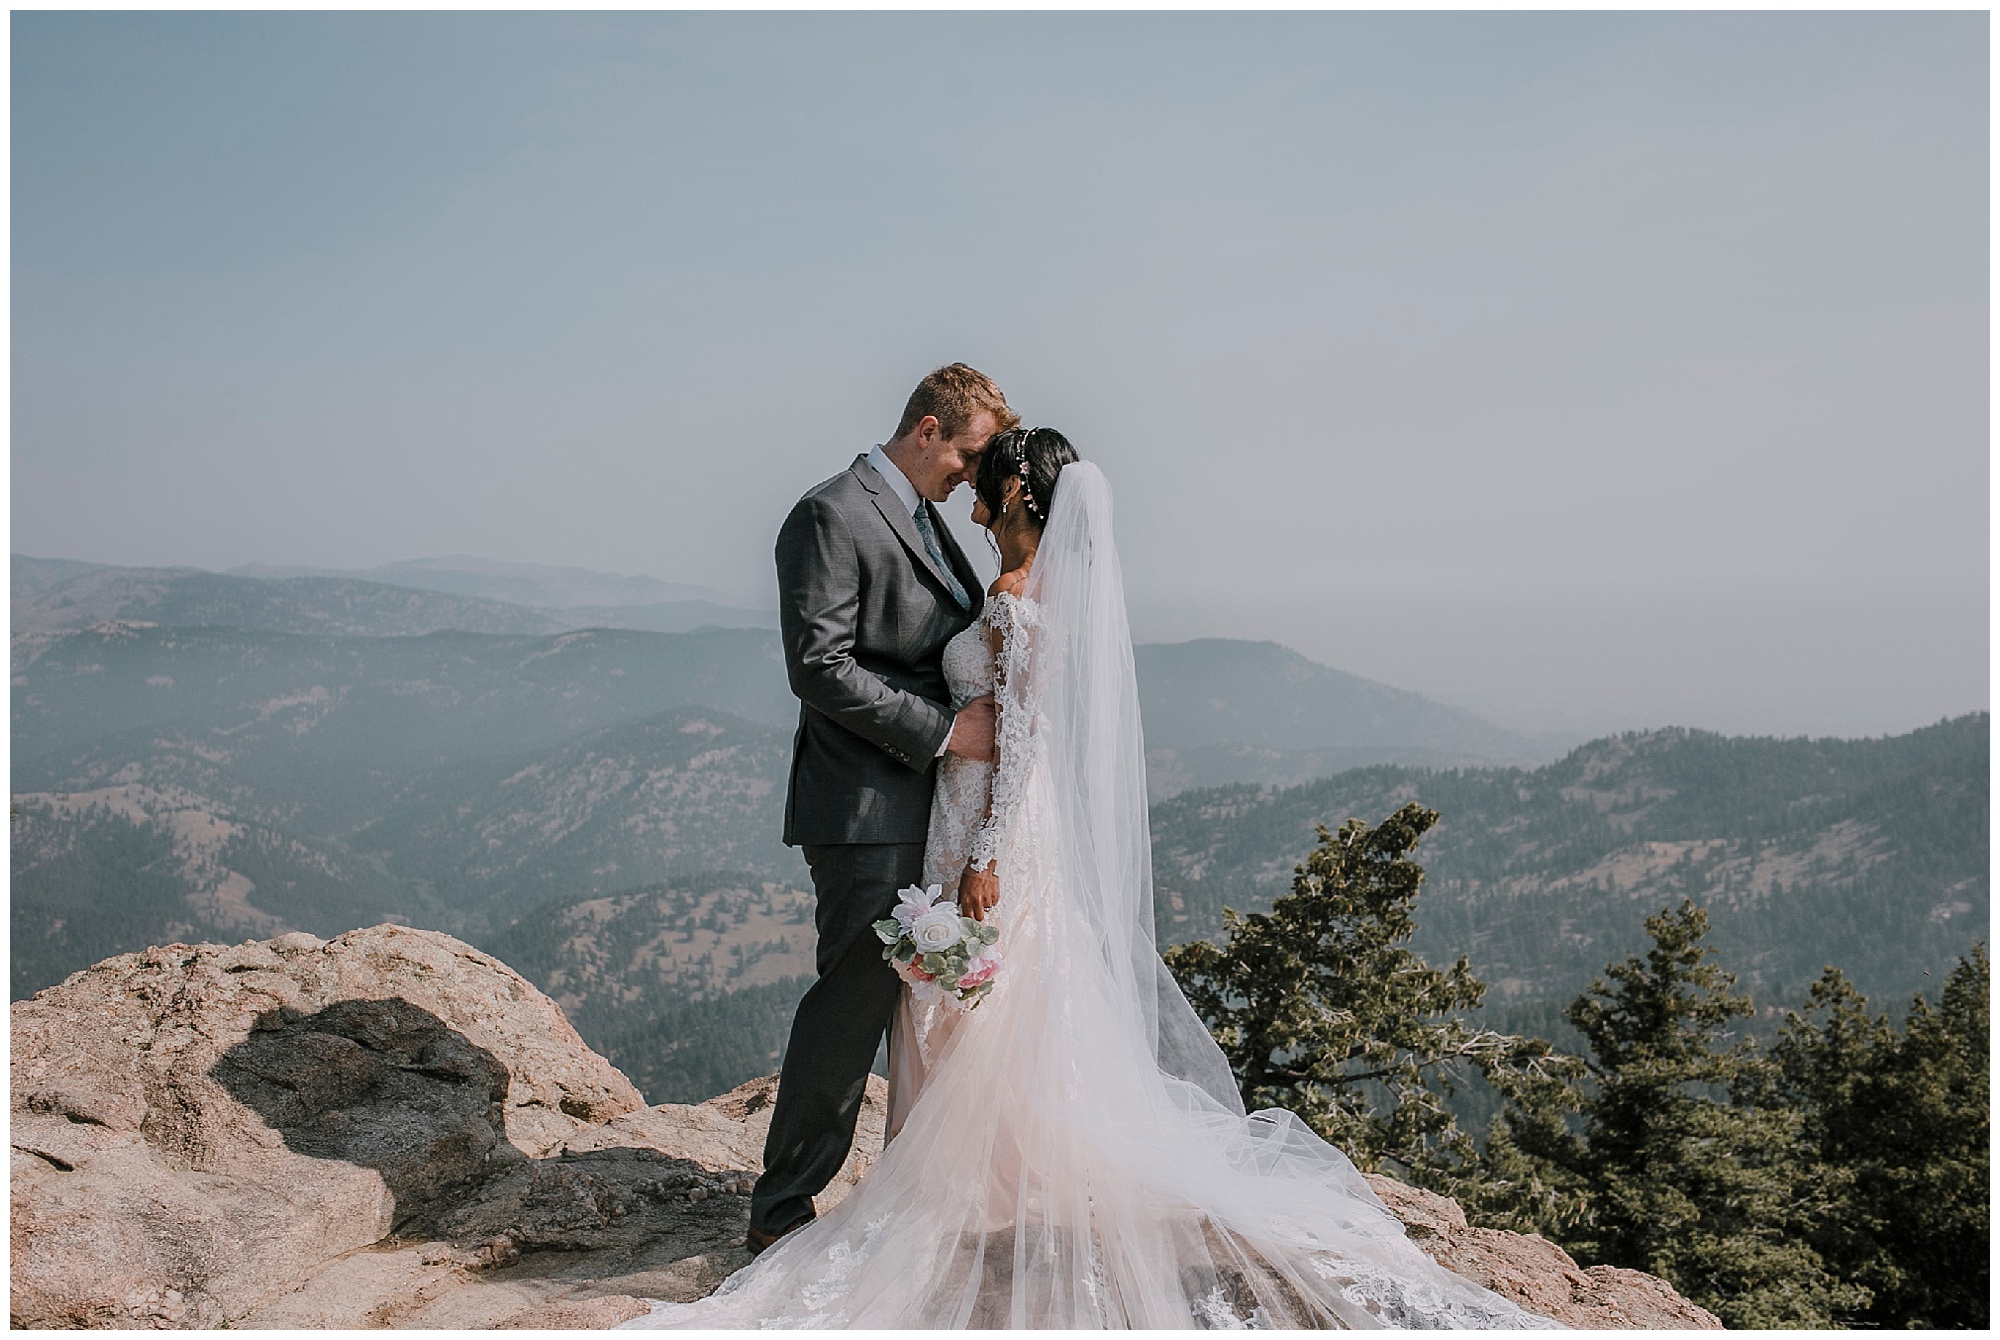 boulder, Colorado, elopement, photographer, photography, photos, wedding, engaged, eloped, hitched, sunrise amphitheater, red rocks, Rocky Mountains, destination wedding